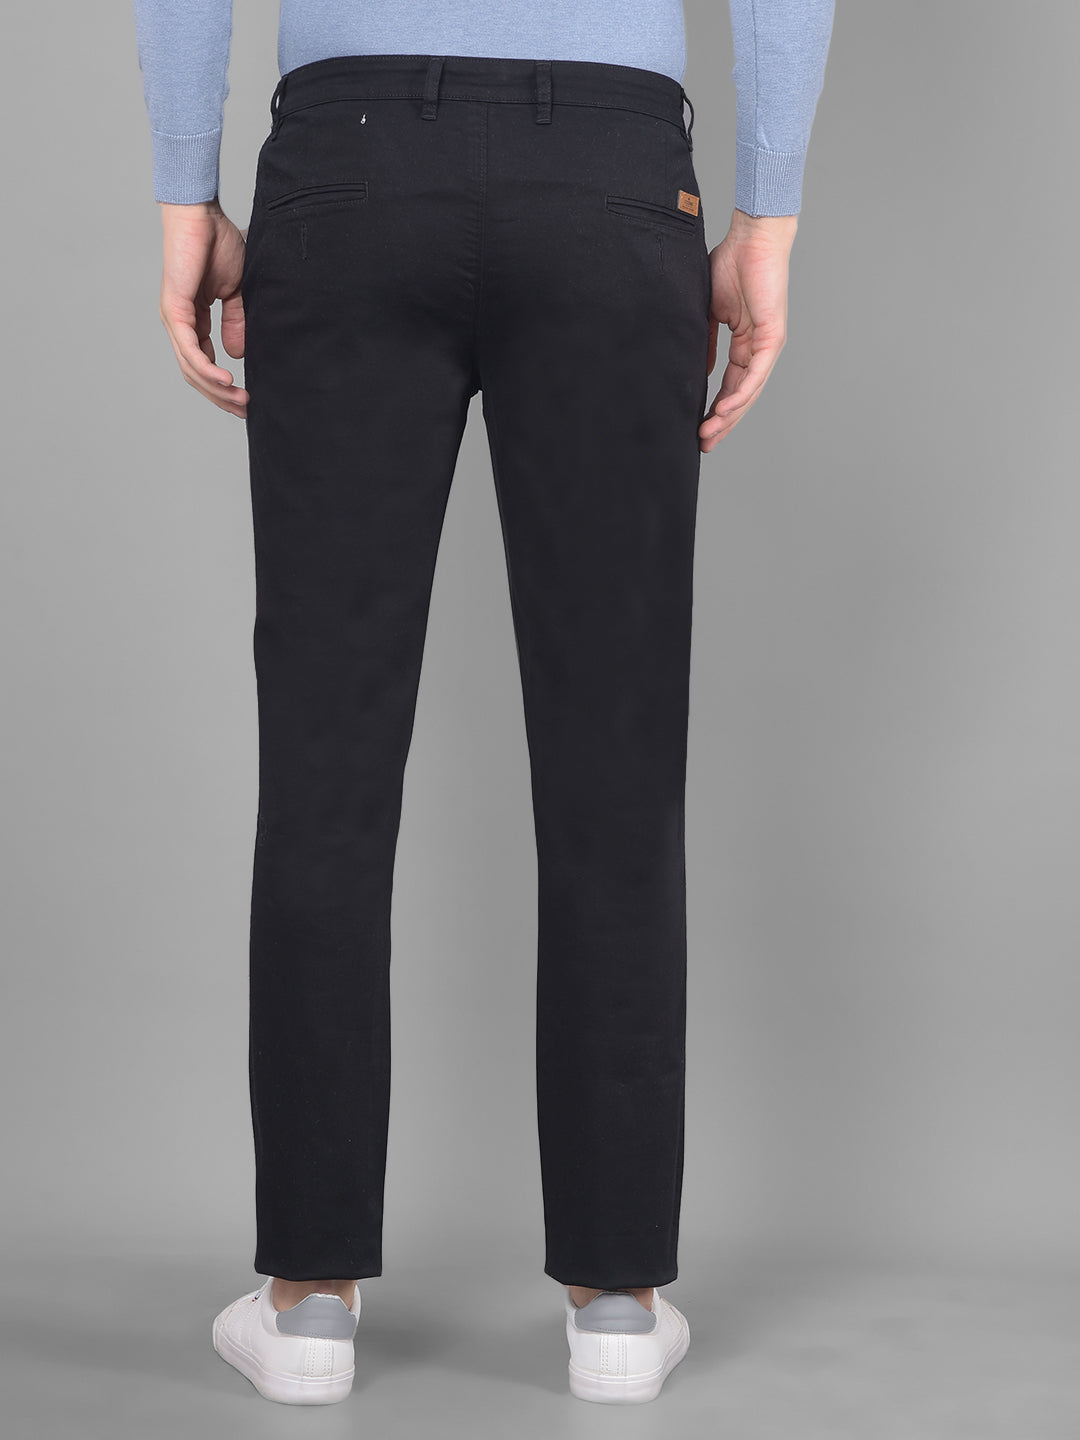 A.P.C. Men's Pants - Trousers, Chinos, Sweats & Slacks for Men |  Ready-to-Wear